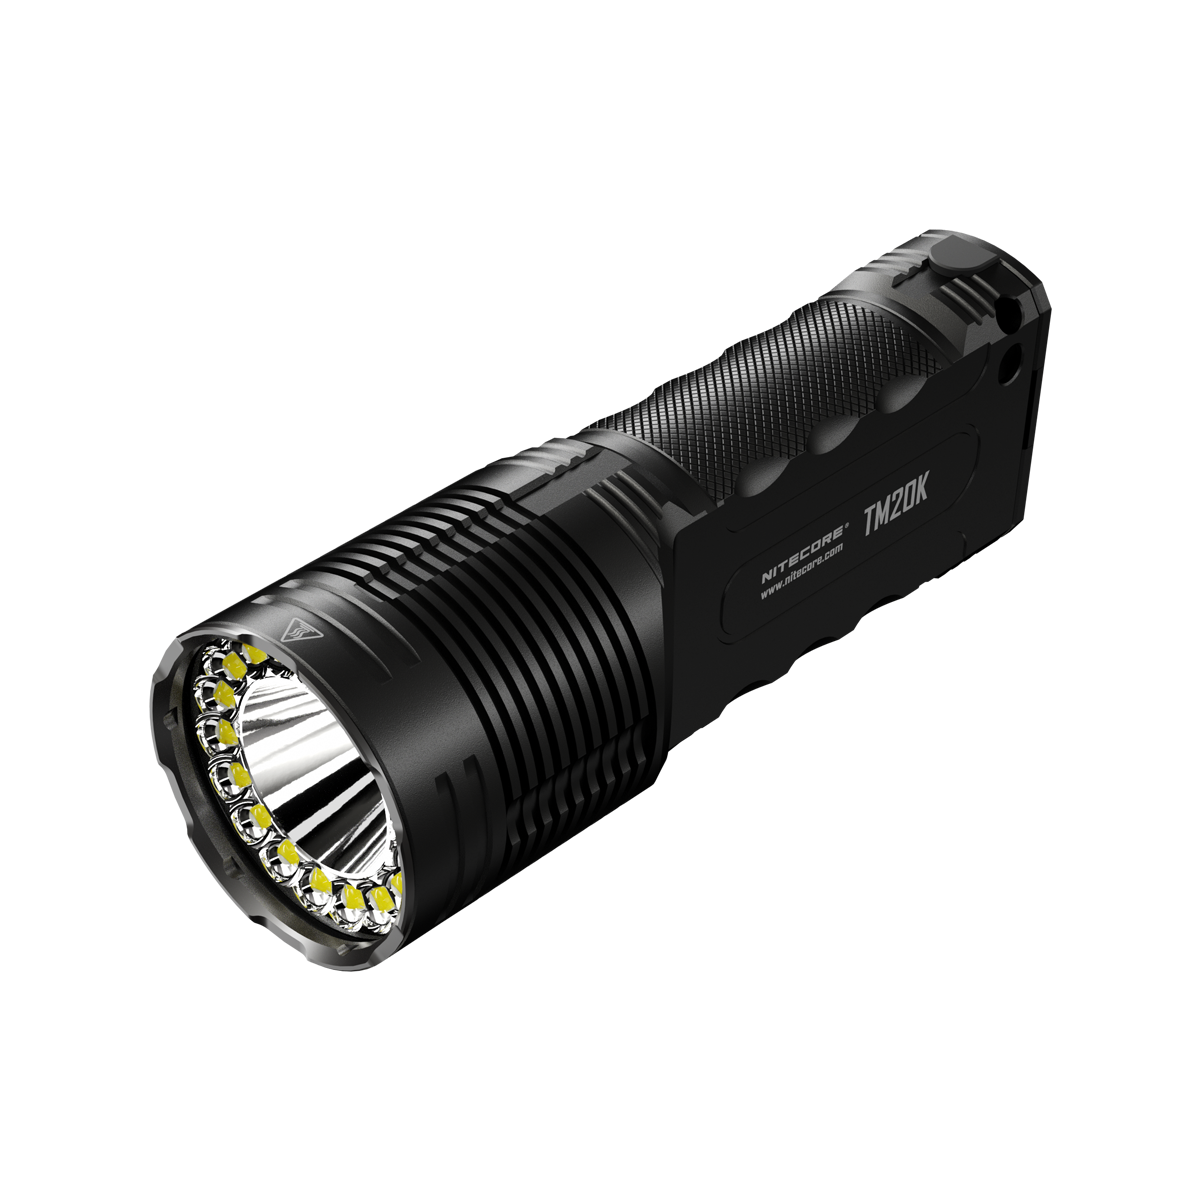 Nitecore TM20K Flashlight 20,000 Lumen Rechargeable Flashlight